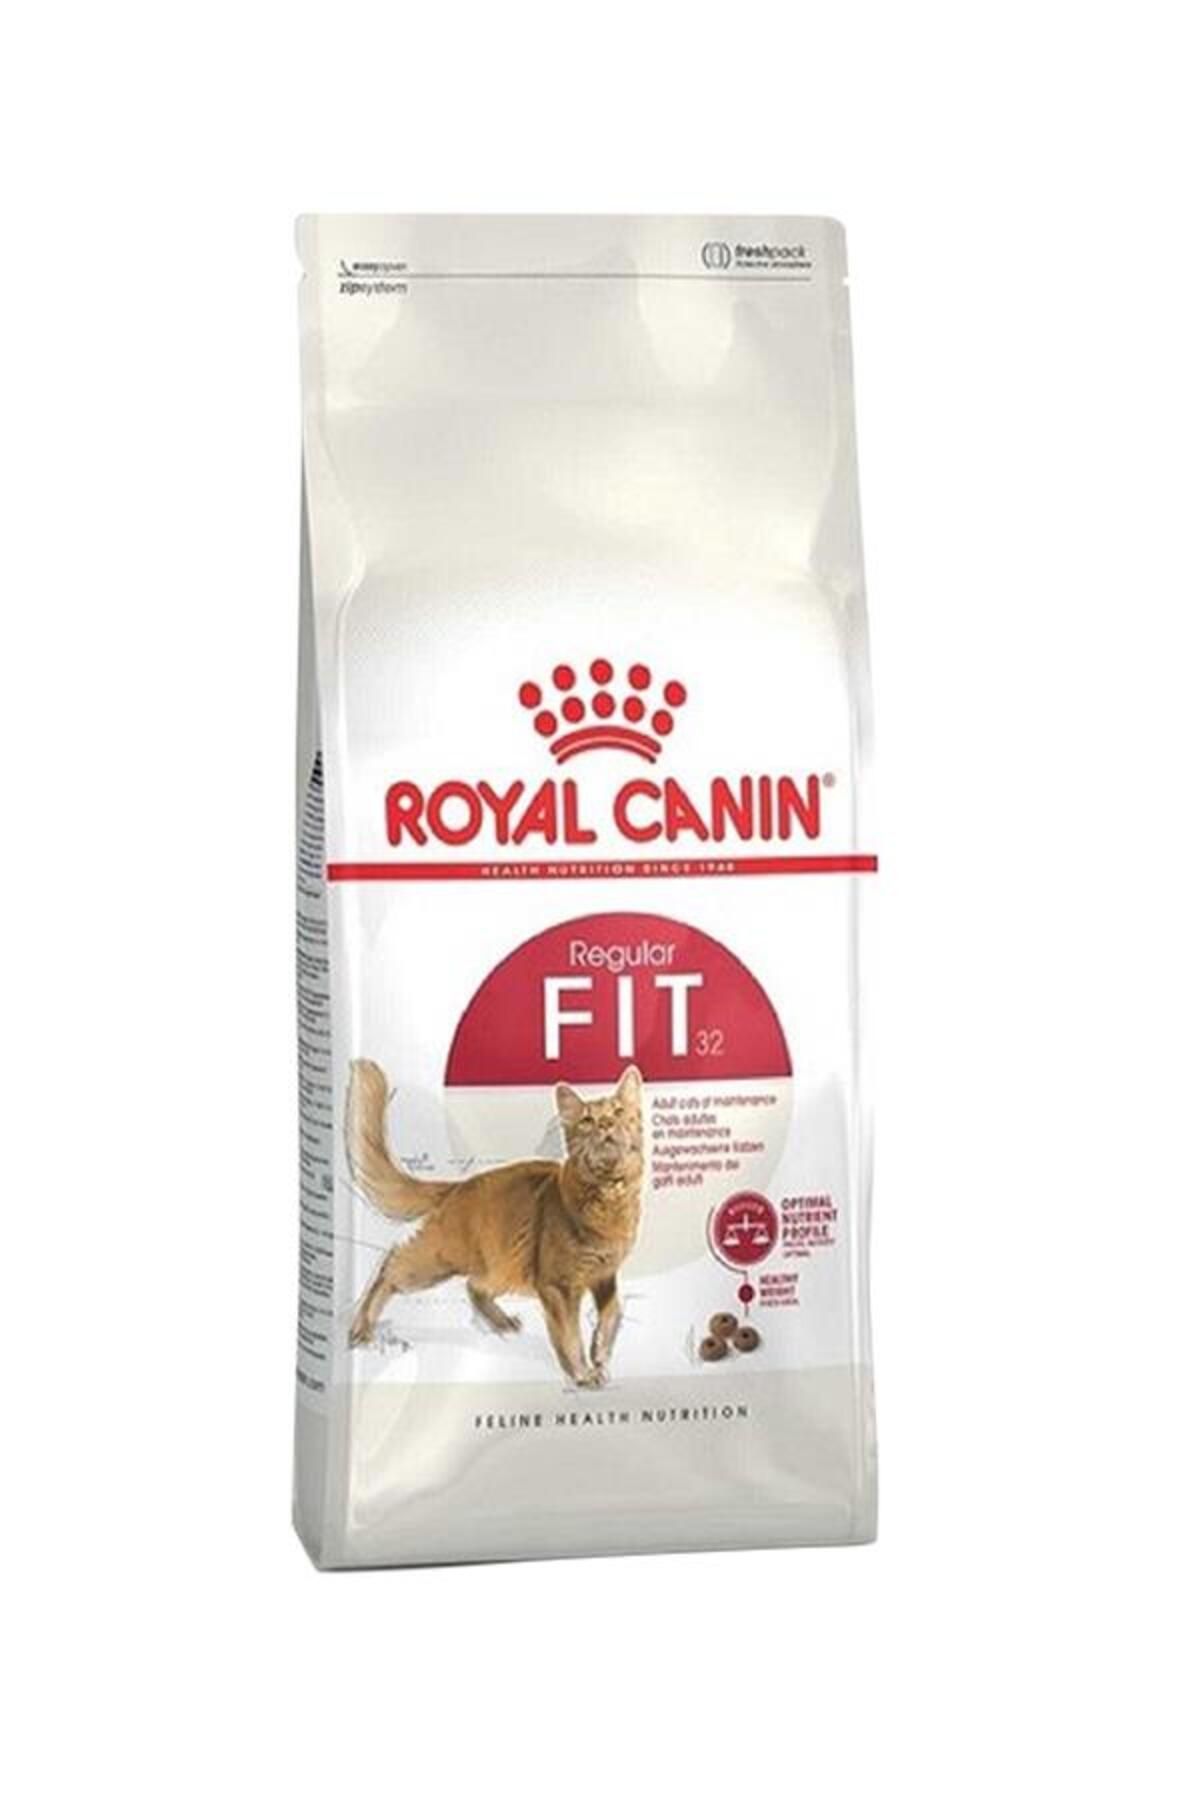 Royal Canin Cat Fhn Fit 32 Kedi Maması 2 Kg